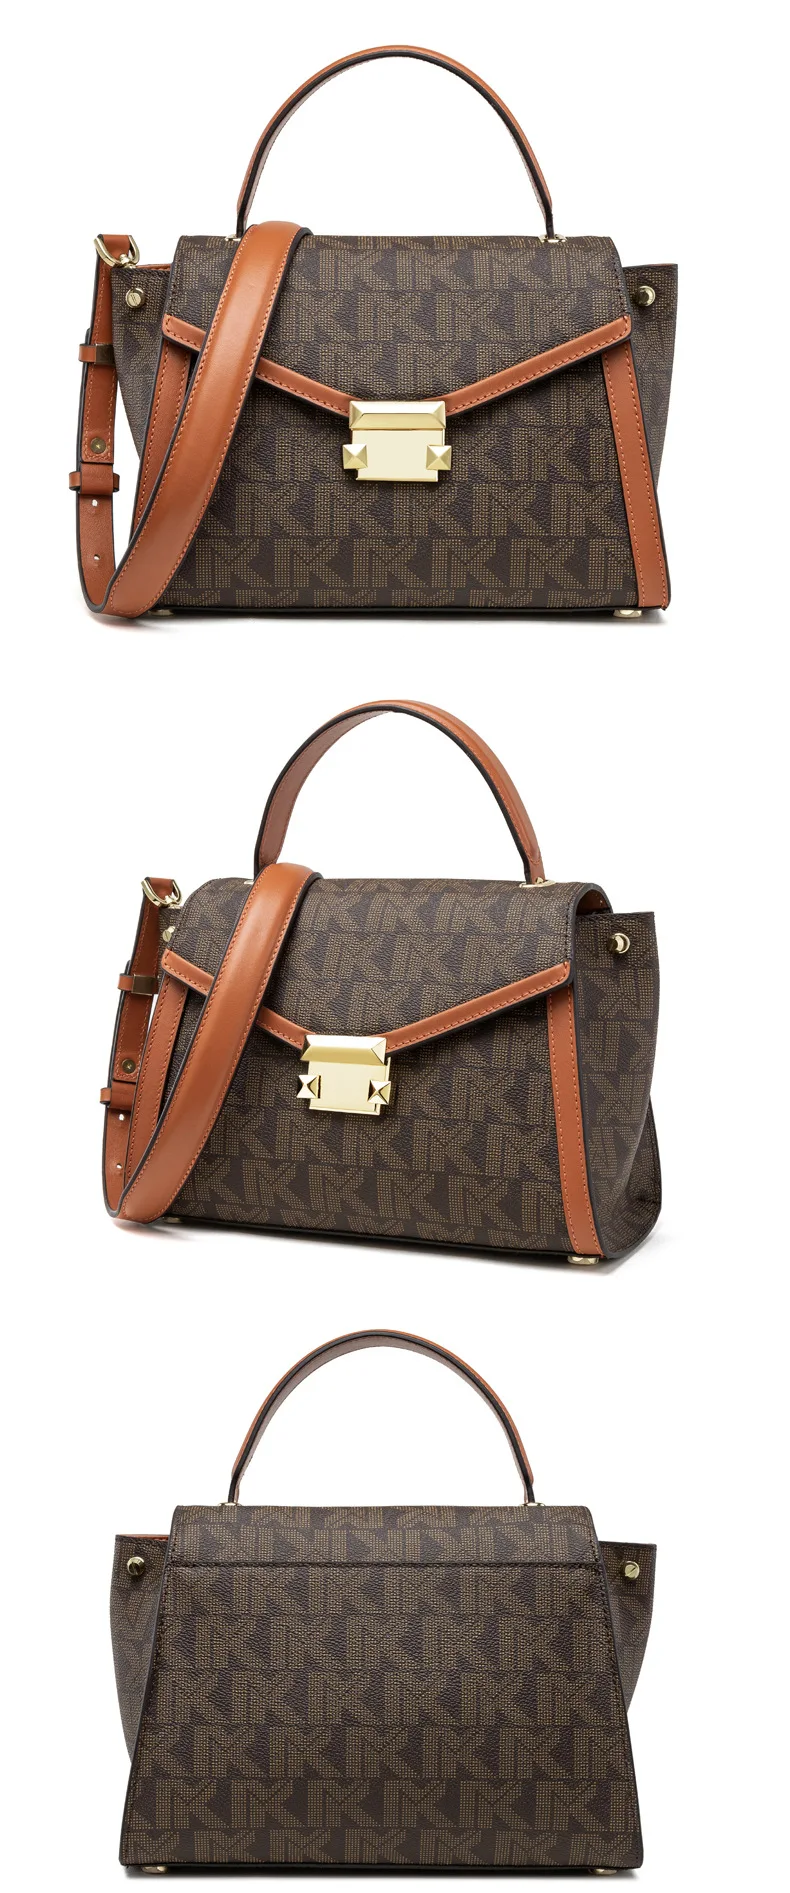 Fashion classic ladies handbag luxury brand style top-handle women messenger bags genuine leather